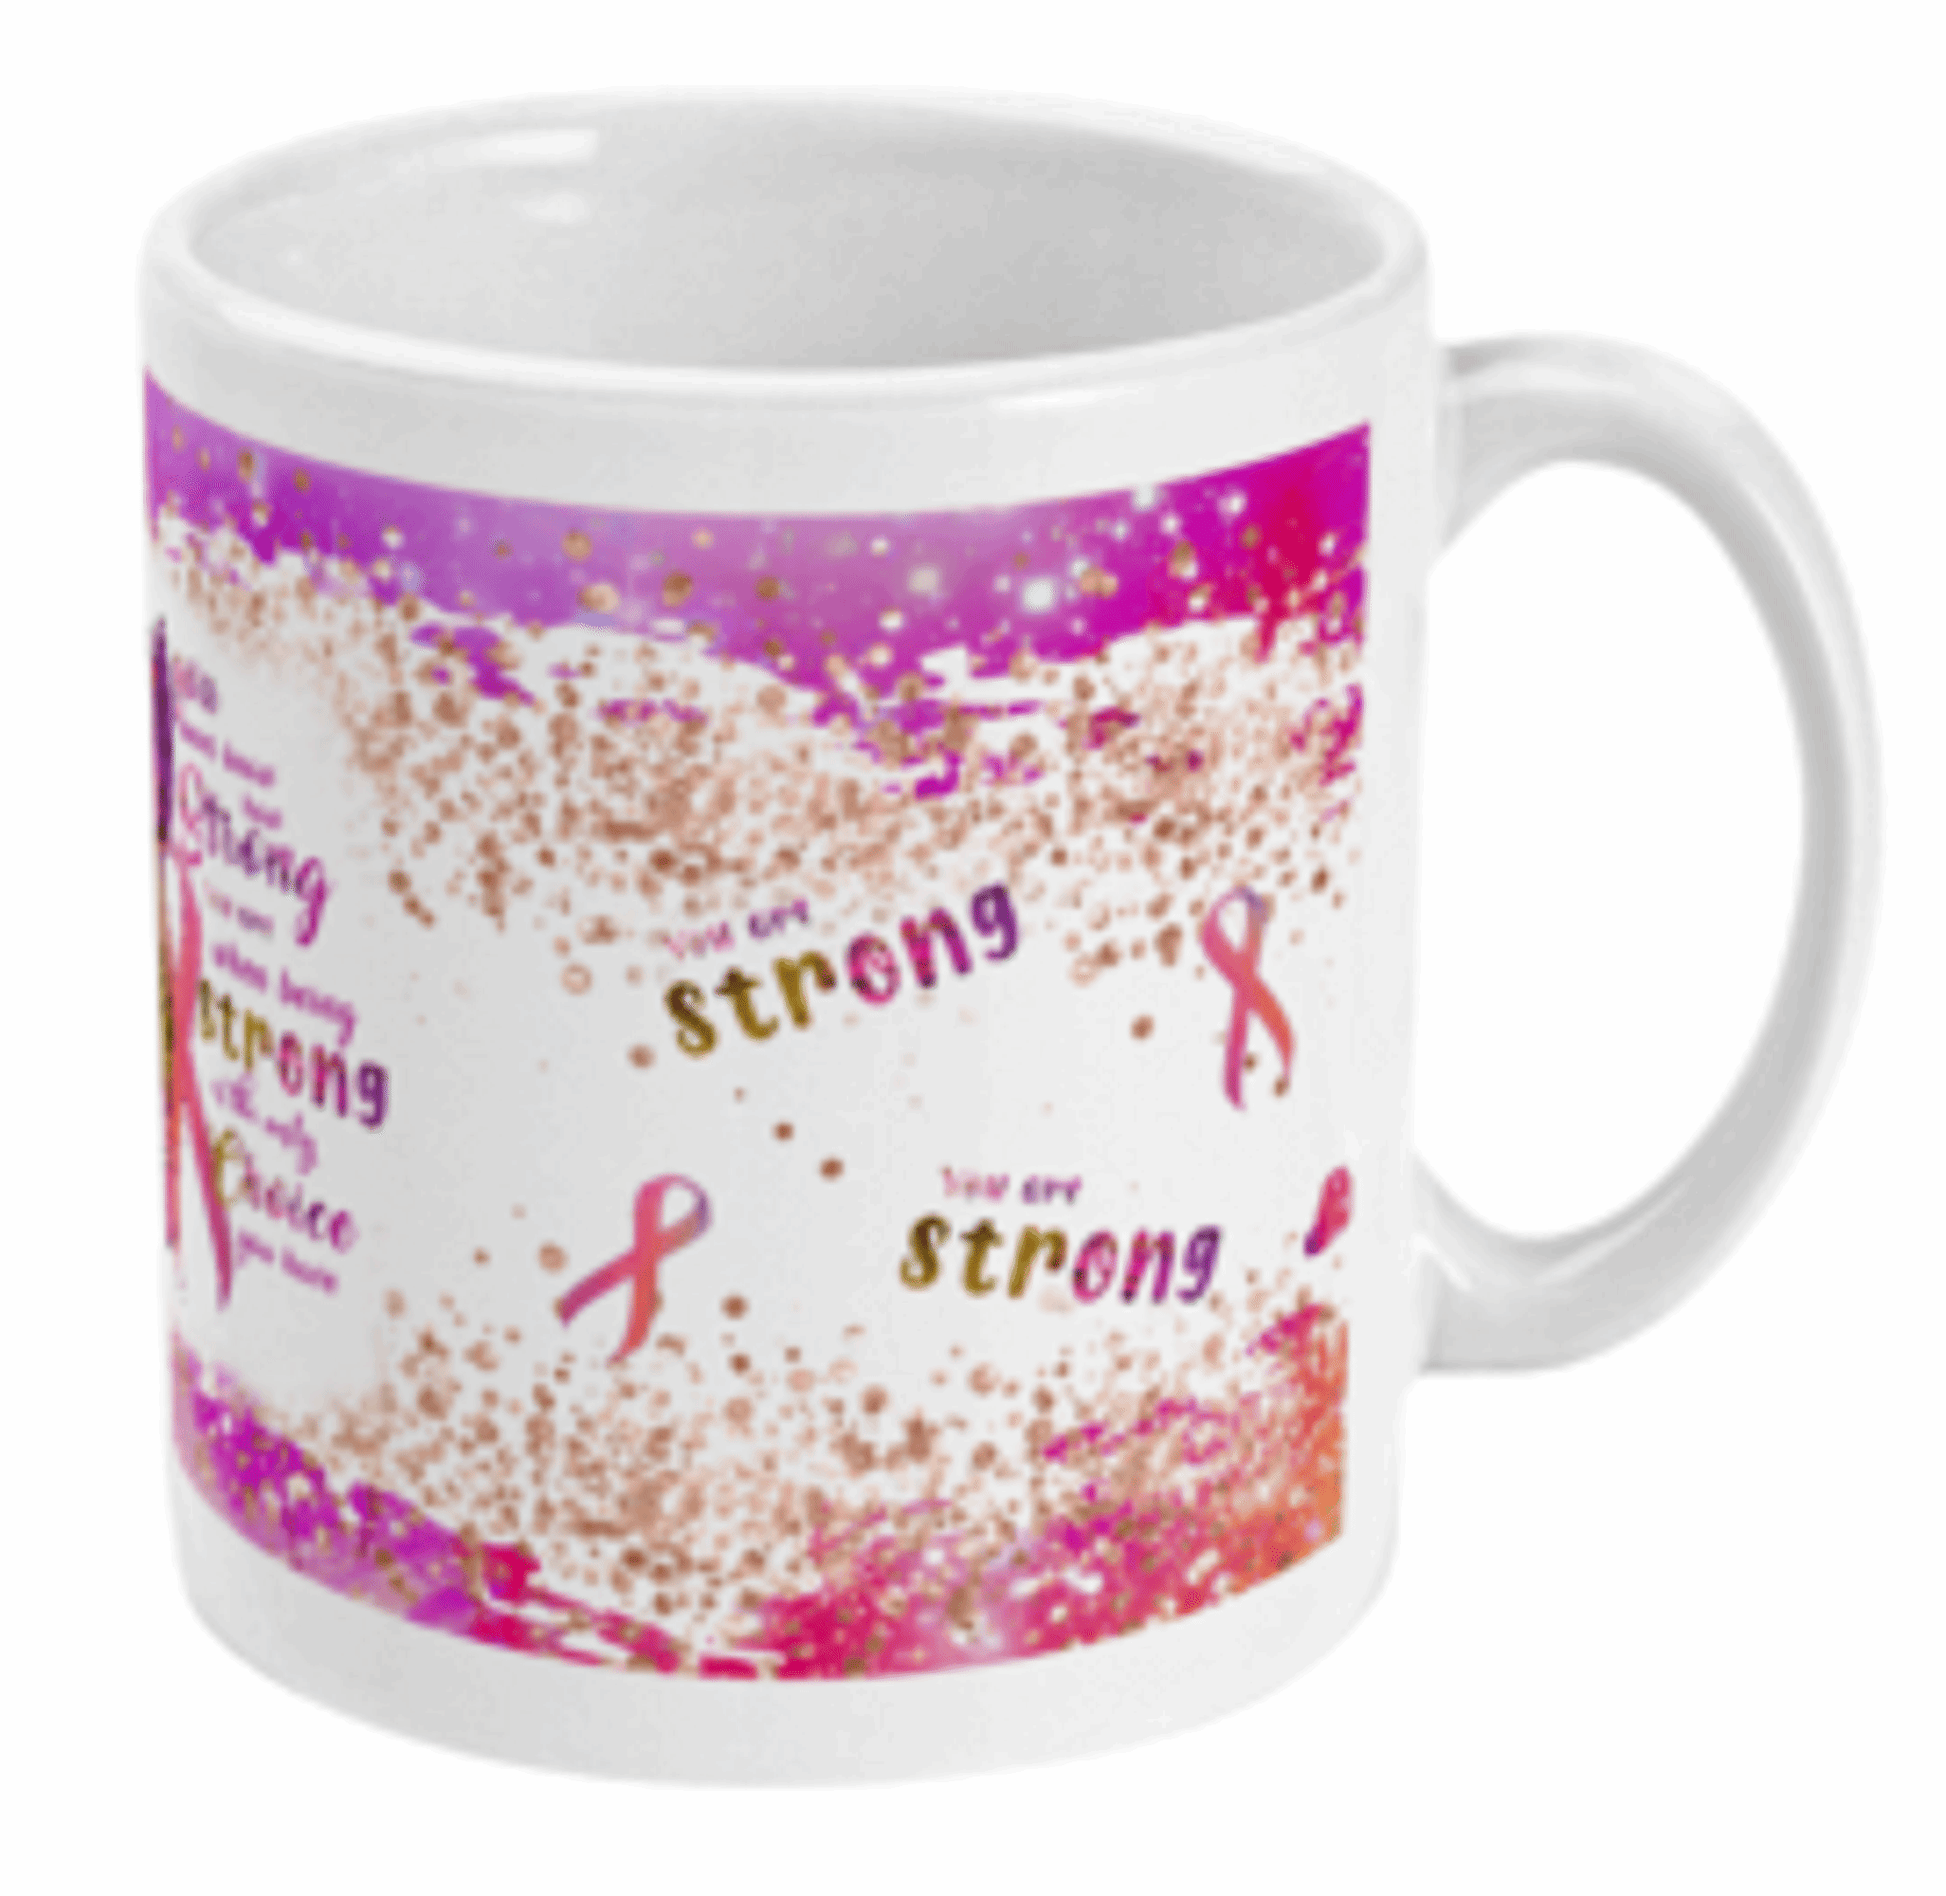  Cancer Awareness Coffee/Tea Mug by Free Spirit Accessories sold by Free Spirit Accessories